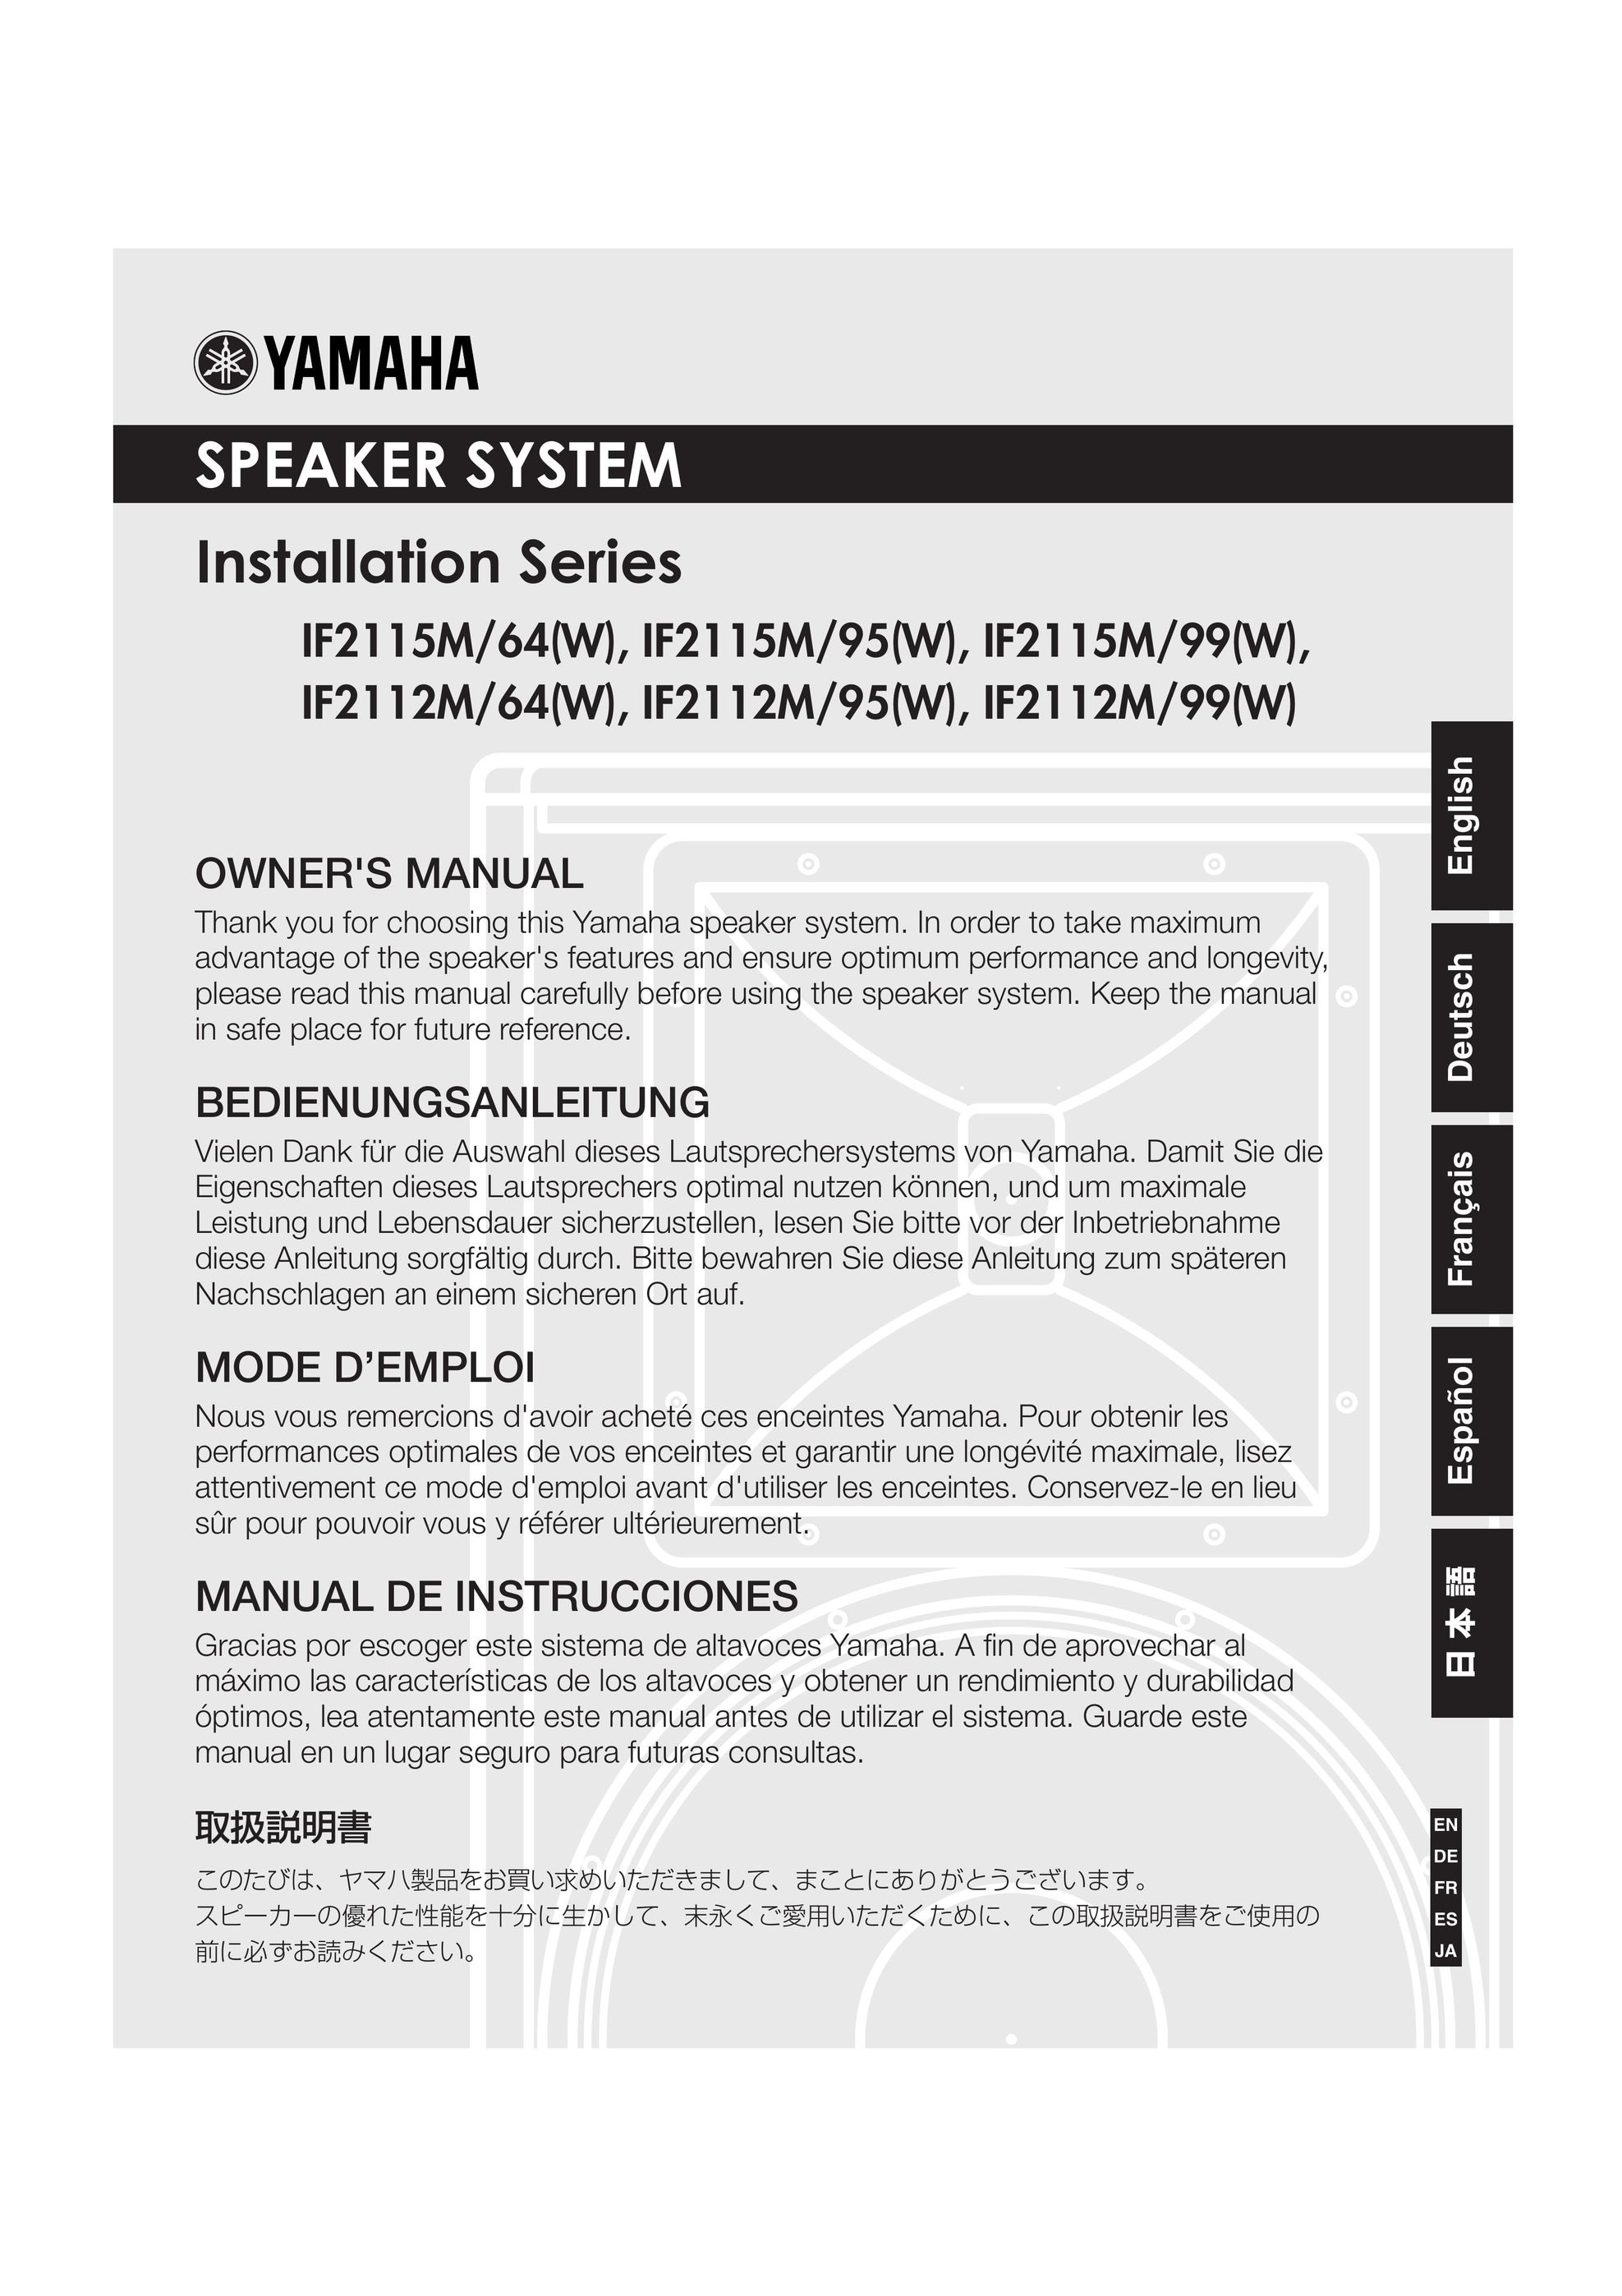 Yamaha IF2115M/64(W) Portable Speaker User Manual